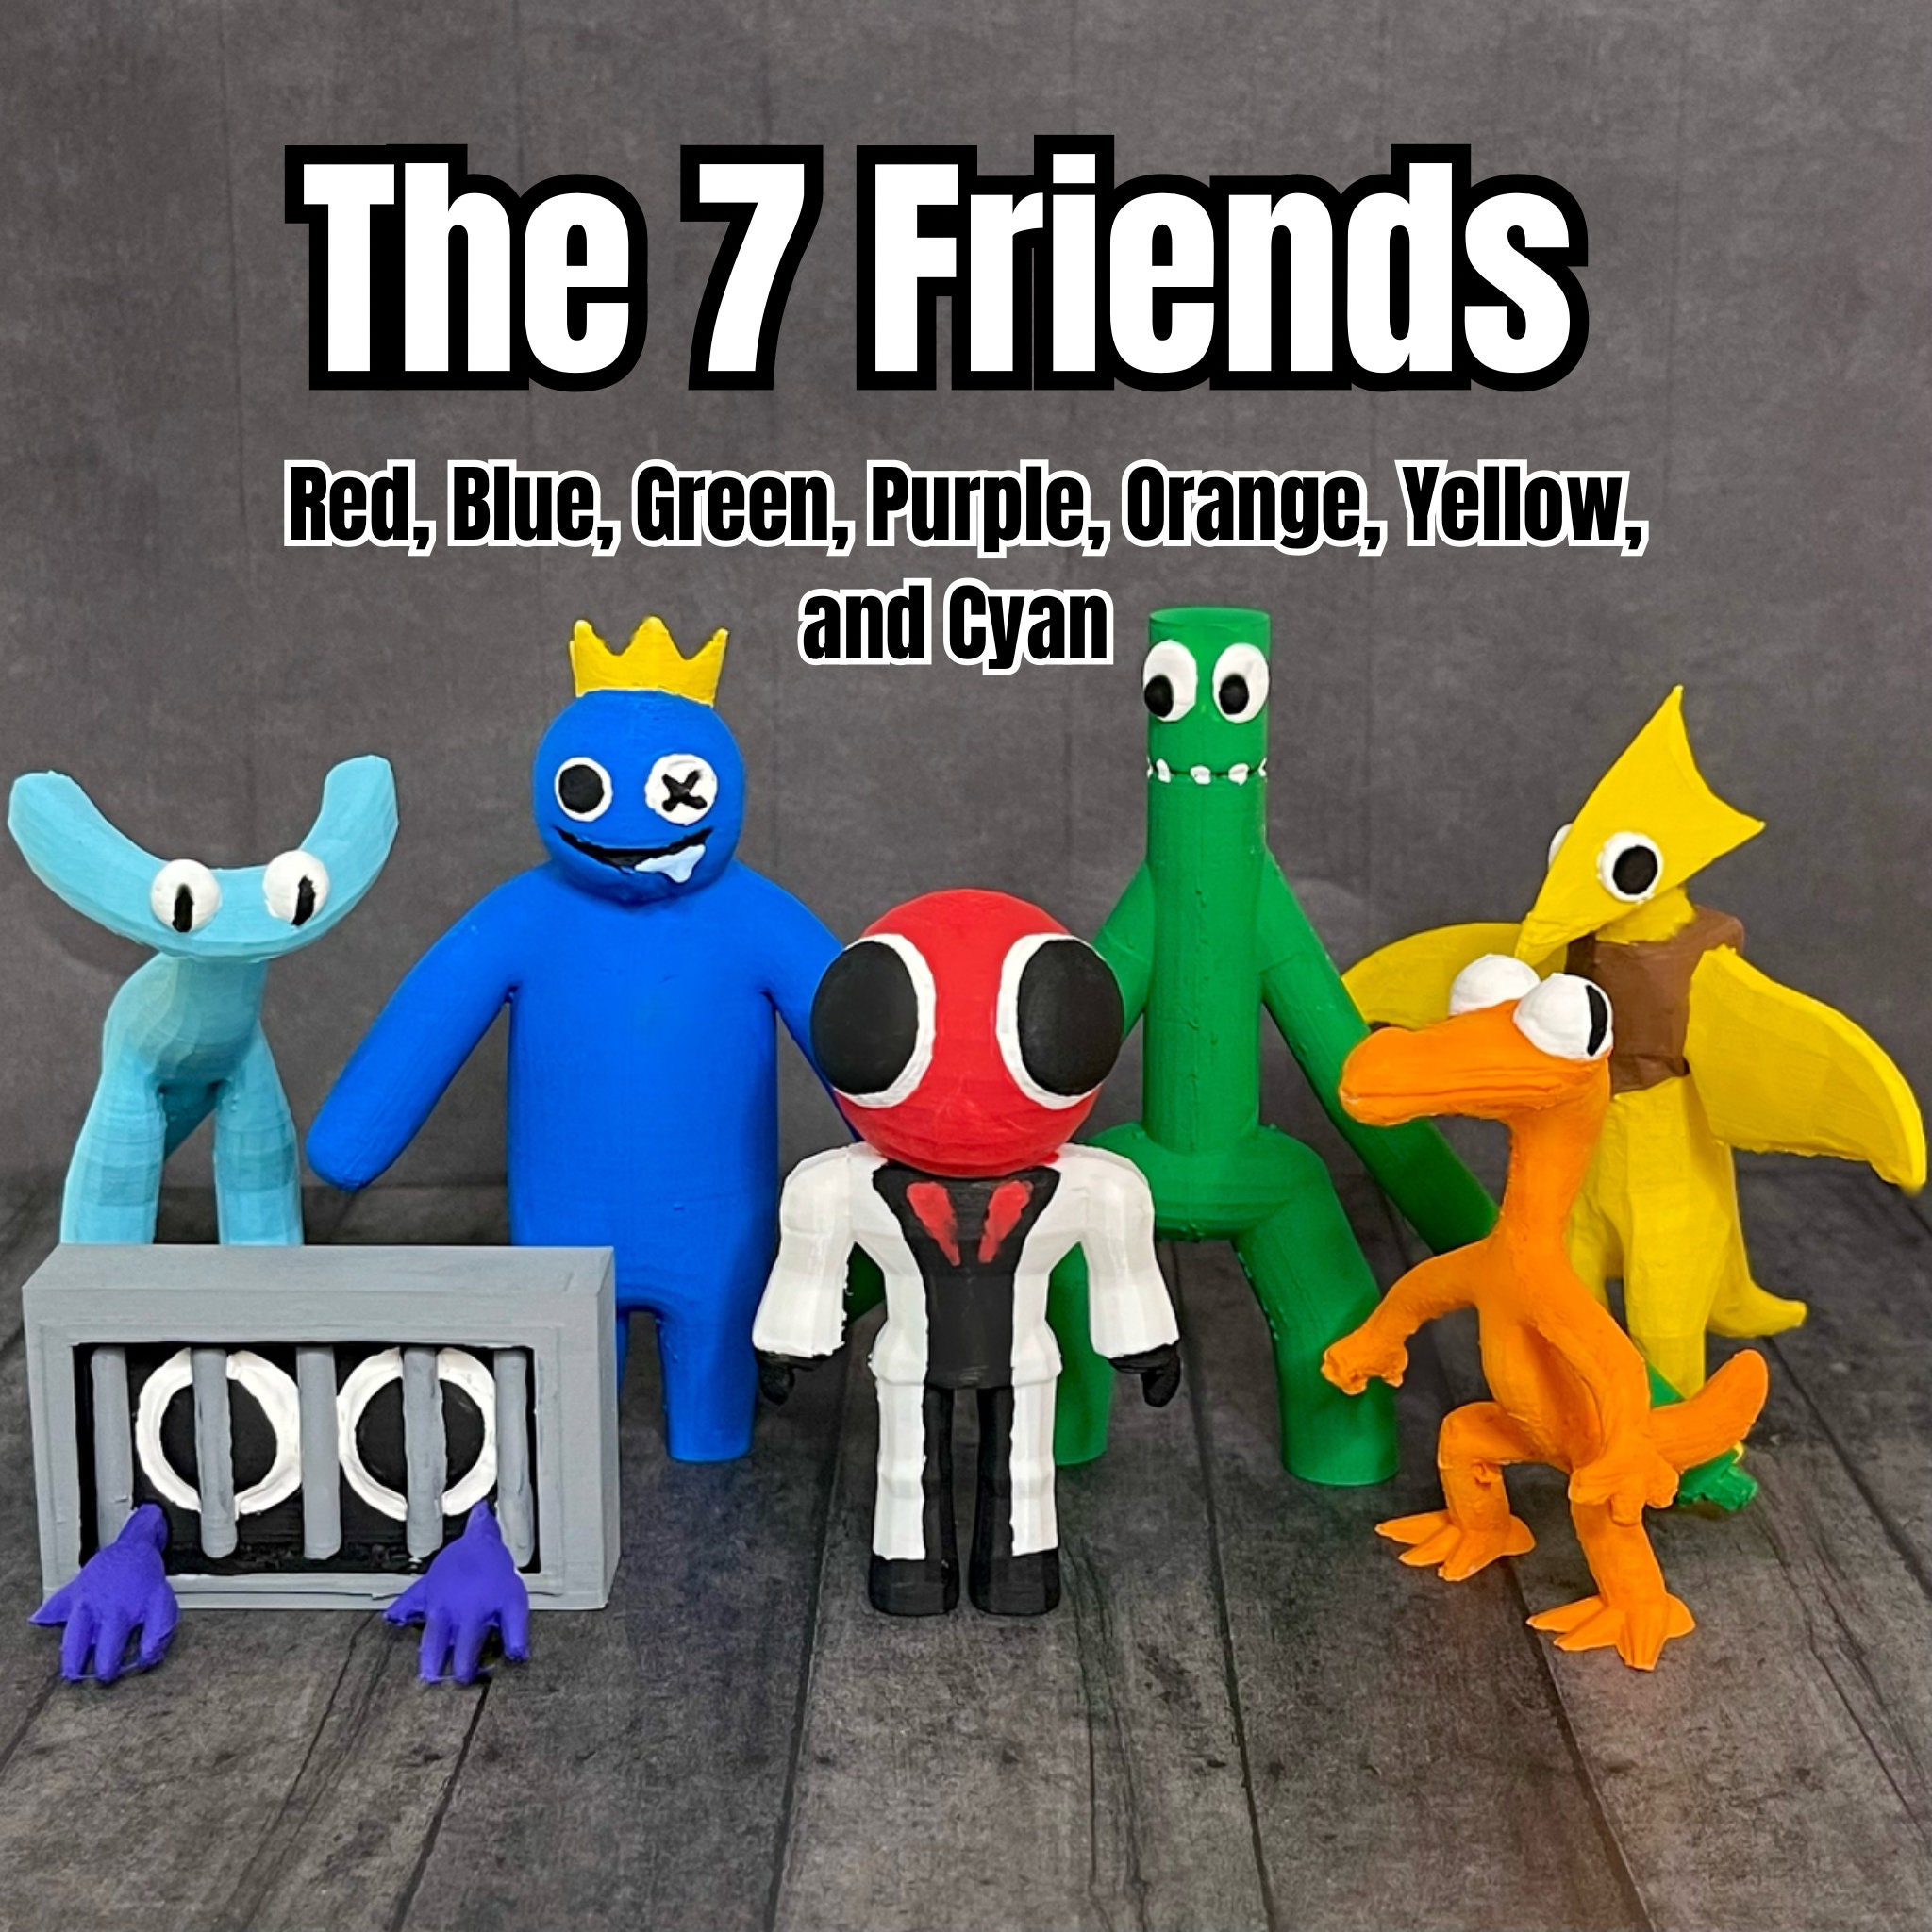 Rainbow Friends Chapter 3 Yellow Cyan Monster Plush Toys Blue